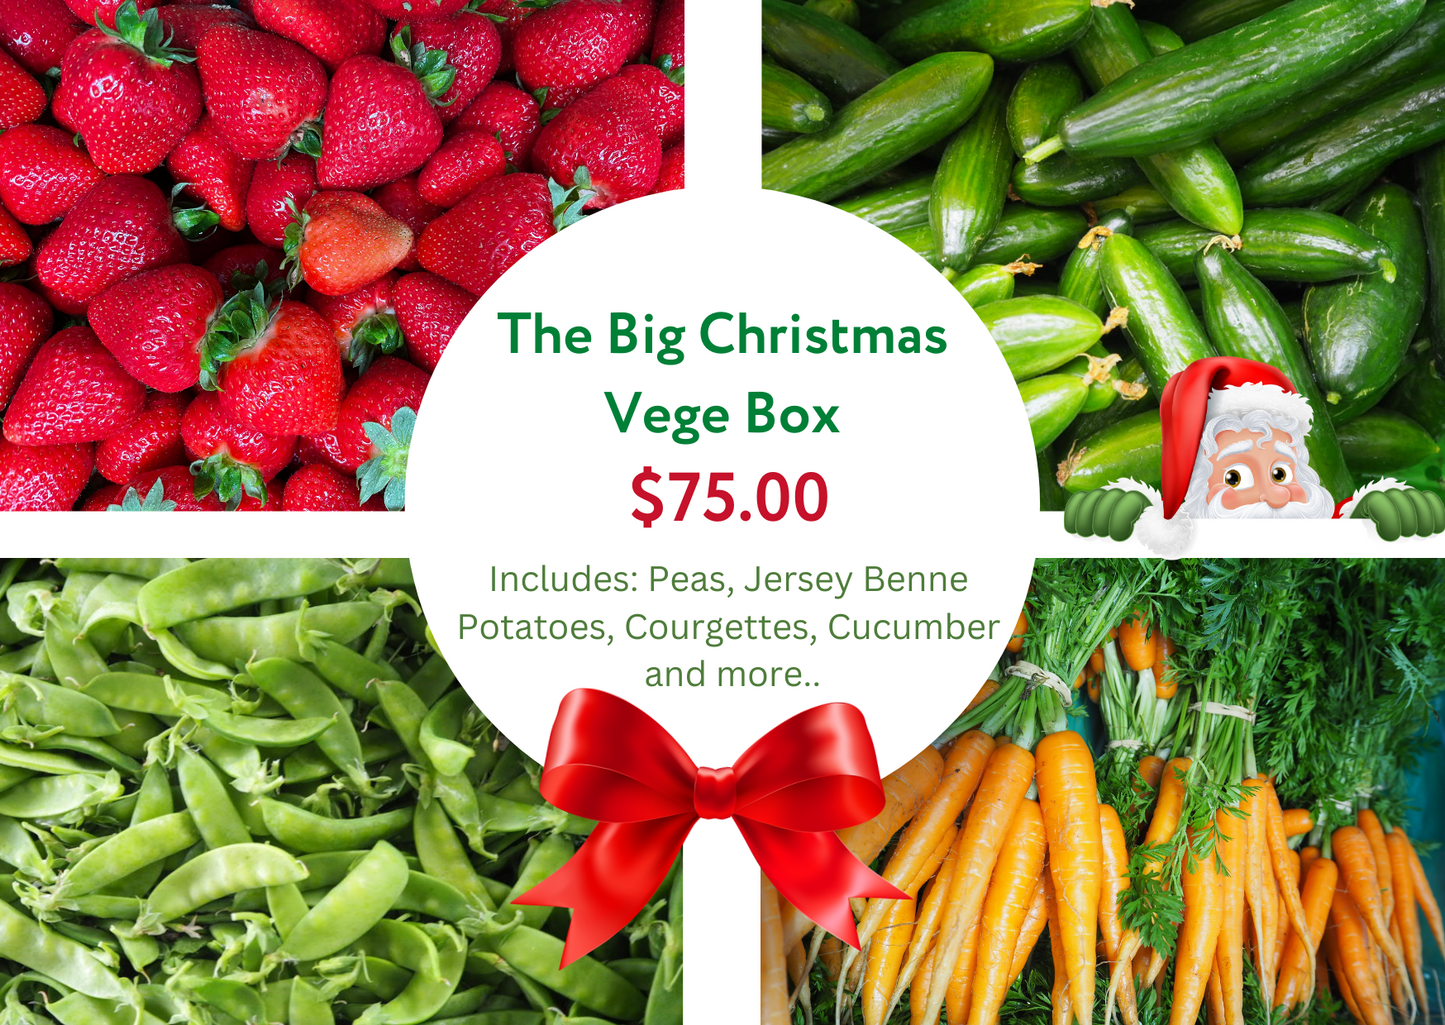 The Big Christmas Vege Box - Delivered Thursday December 21st